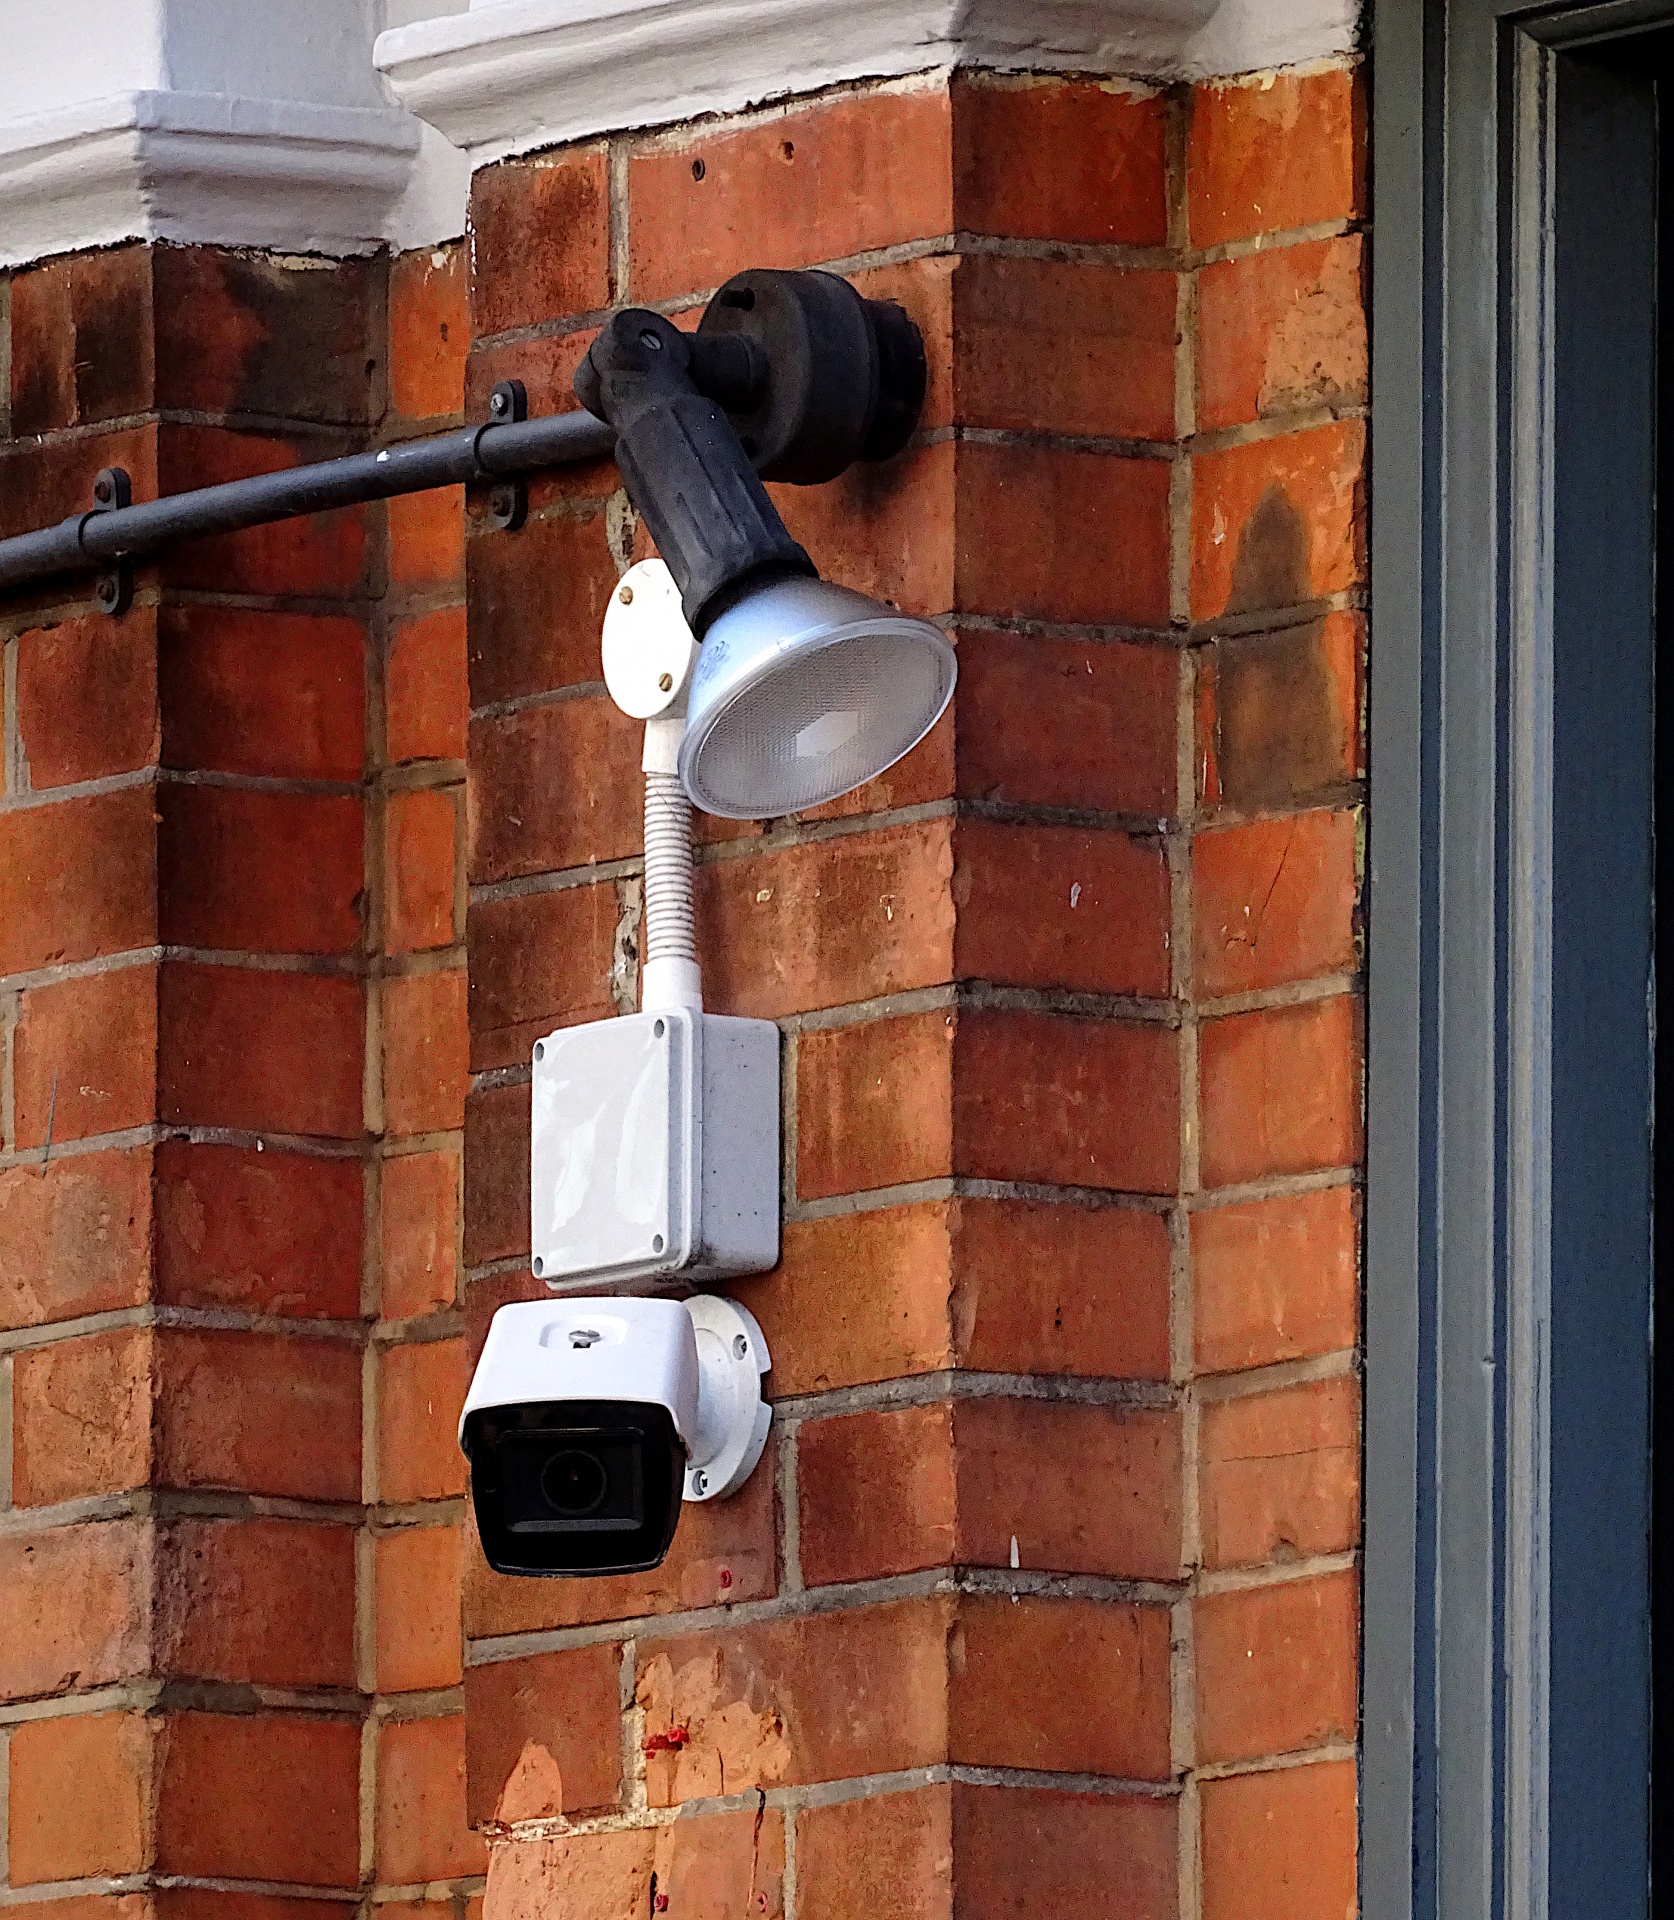 CCTV Surveillance Camera Watching